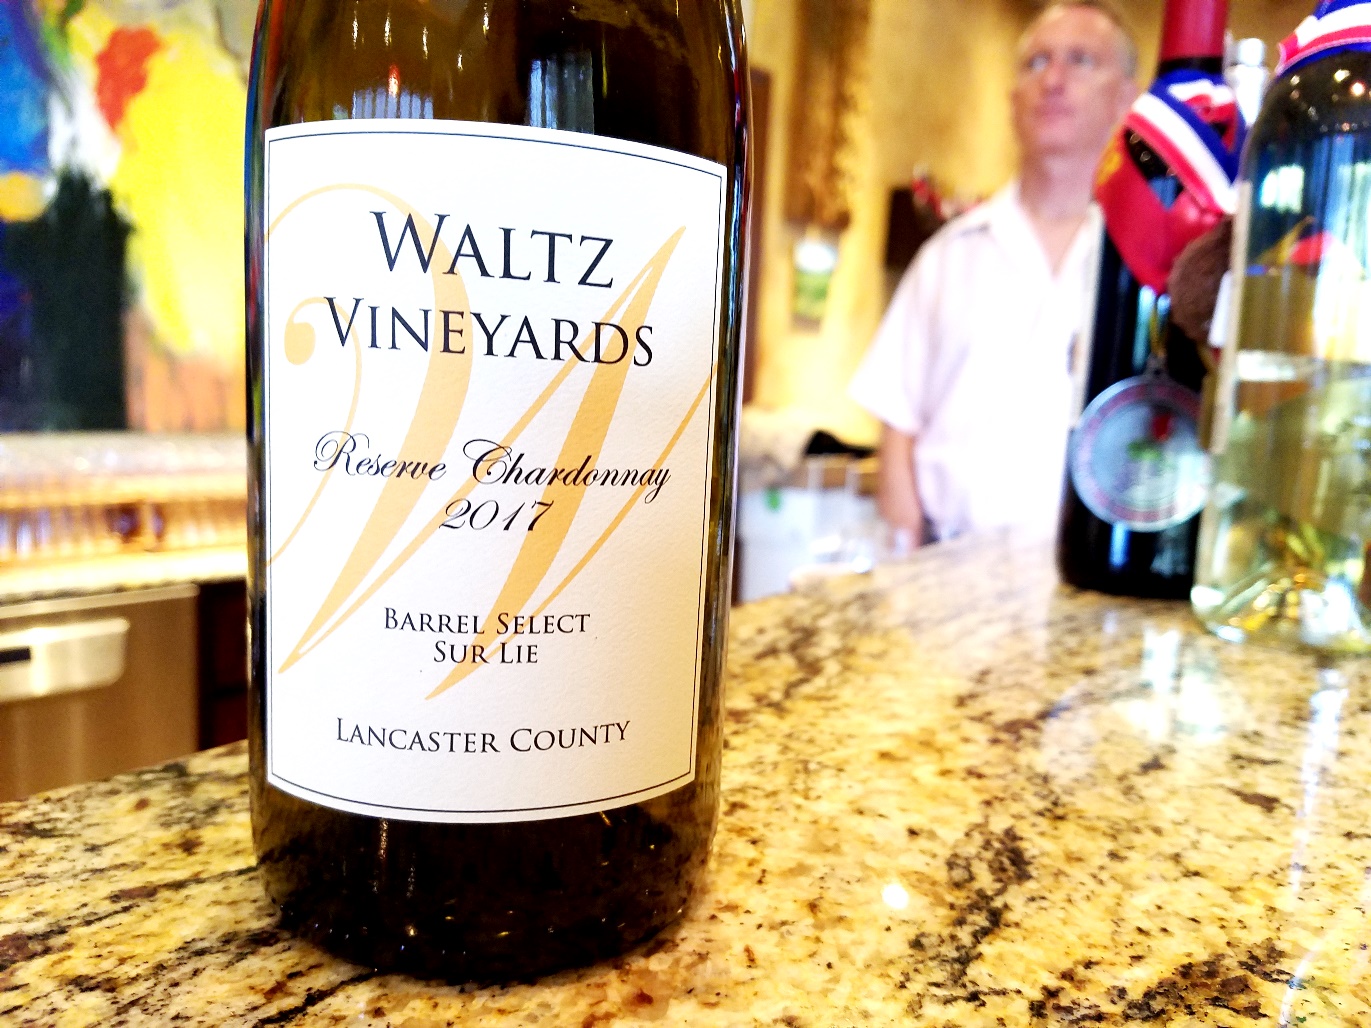 Waltz Vineyards, Reserve Chardonnay 2017, Barrel Select Sur Lie, Lancaster County, Pennsylvania , Wine Casual